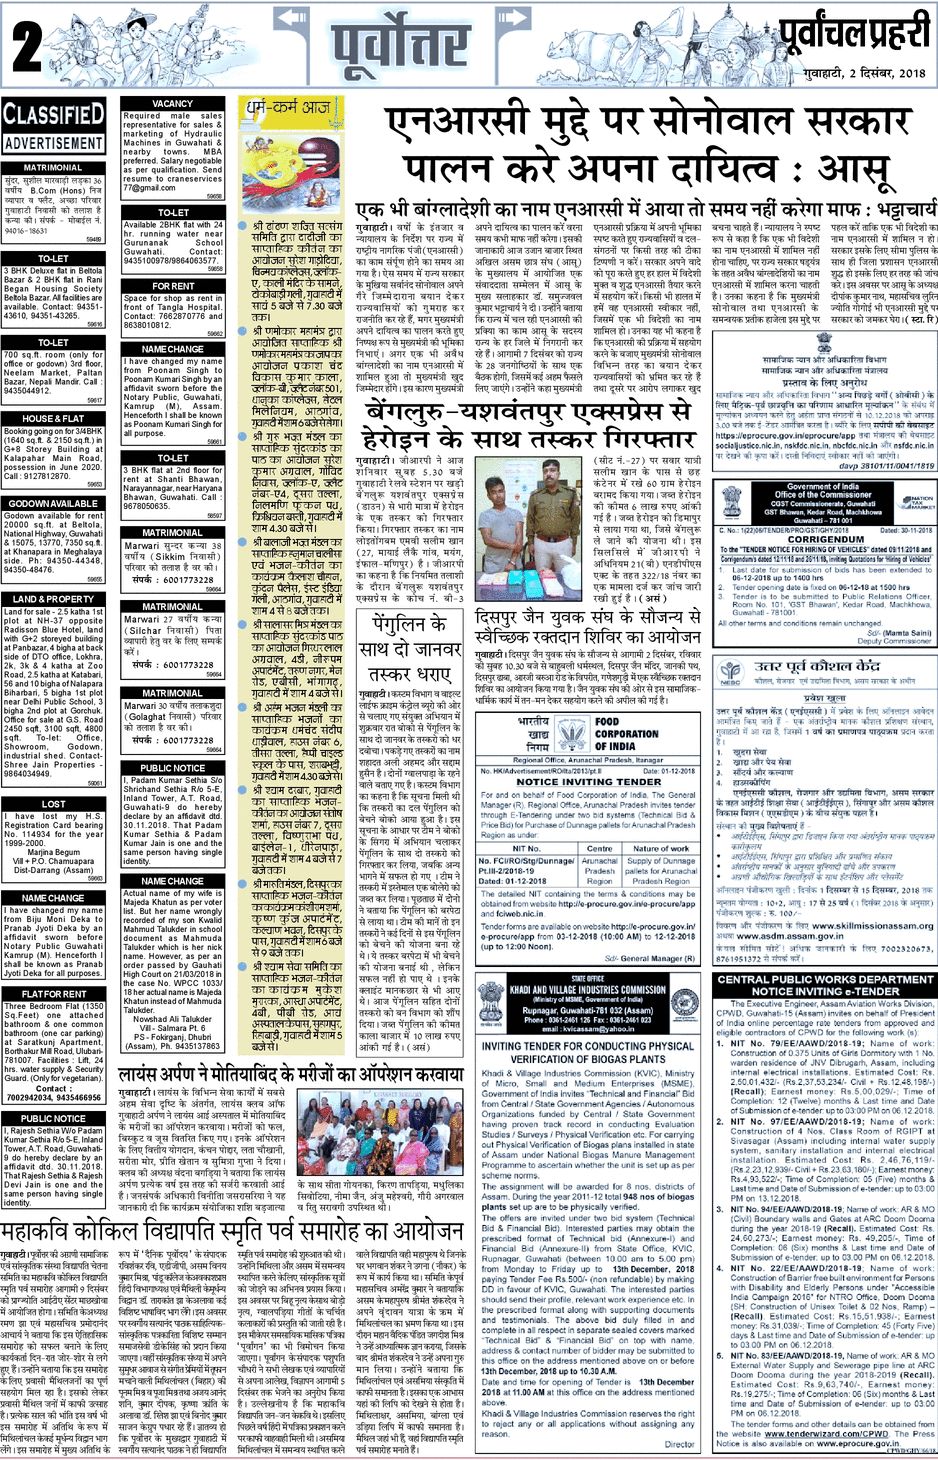 Purvanchal Prahari  Newspaper Classified Ad Booking